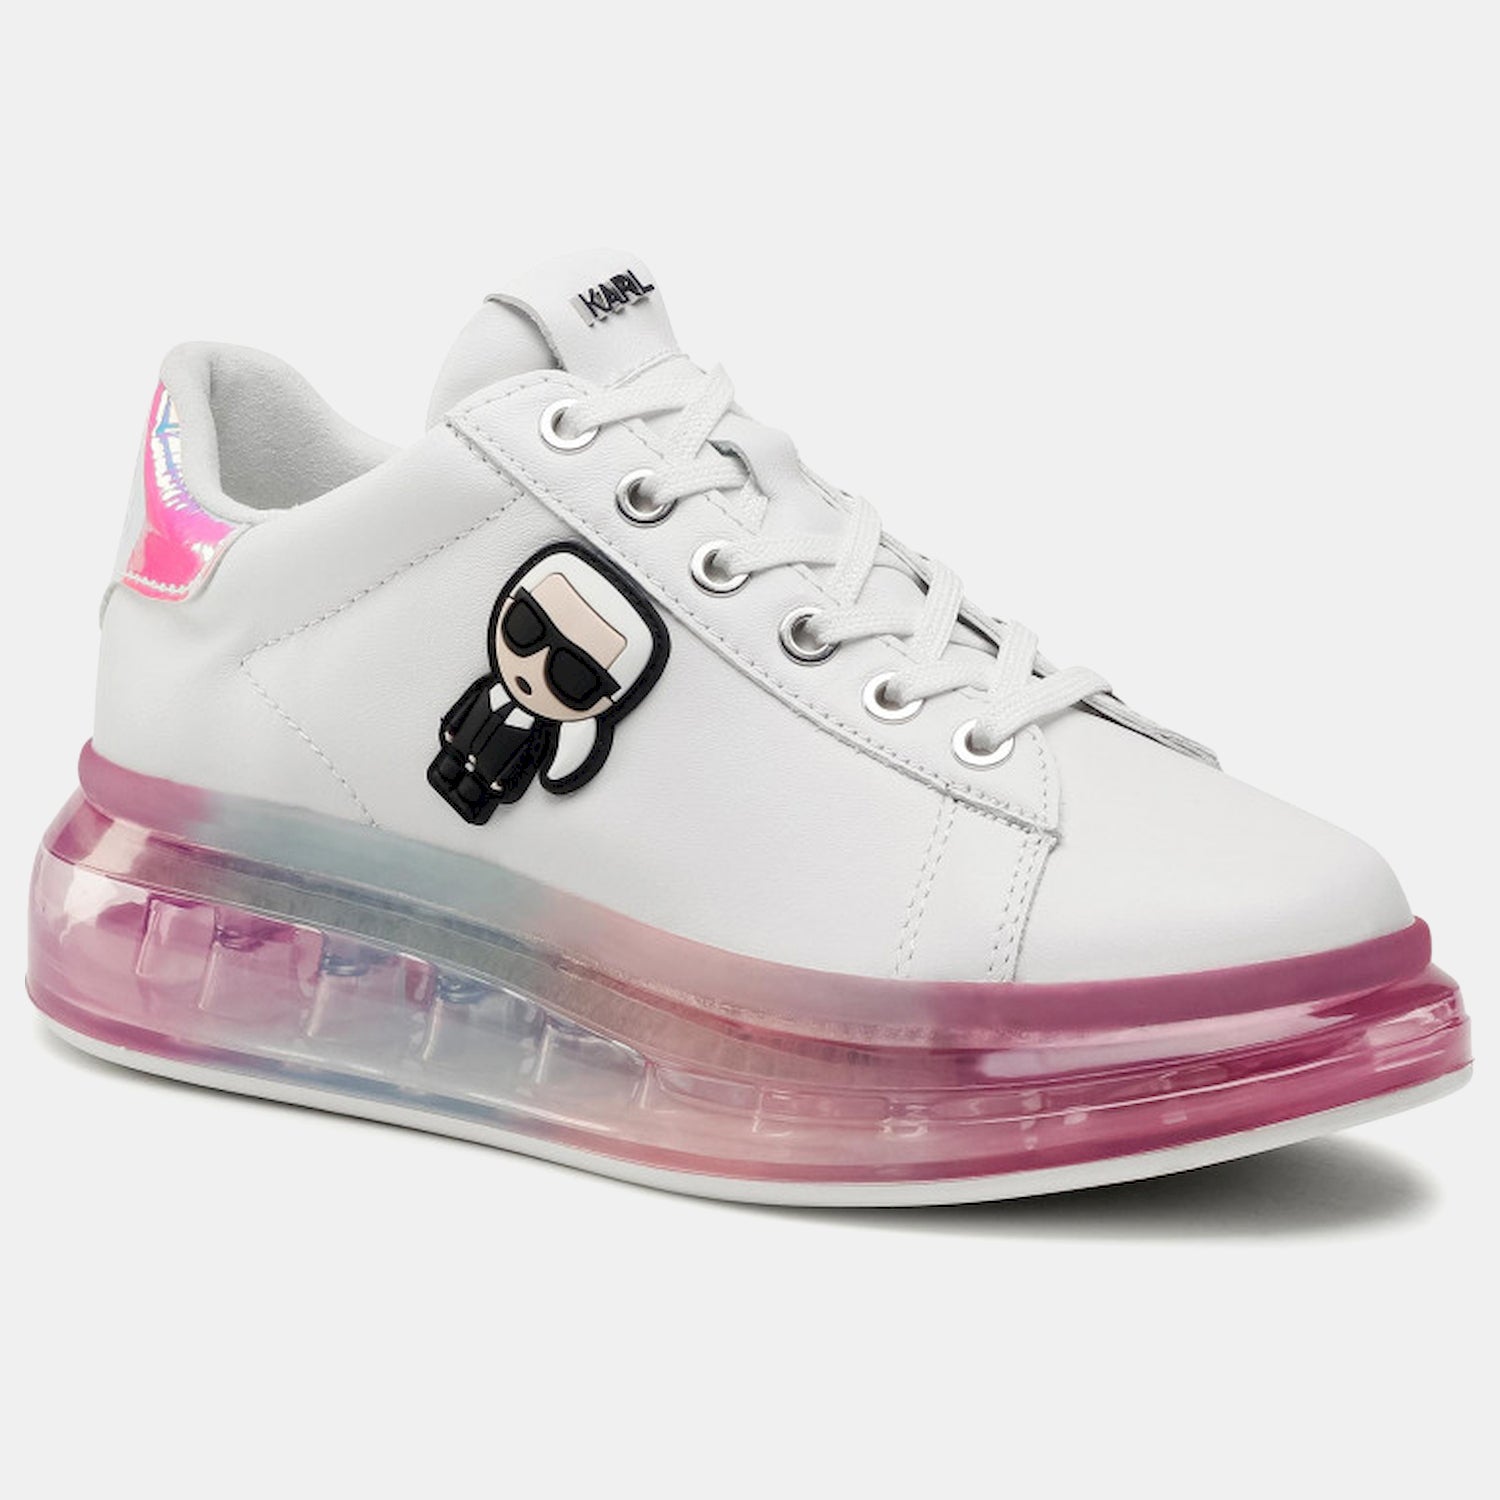 Karl Lagerfeld Sapatilhas Sneakers Shoes Kl62689 Whi Pink Branco Rosa_shot1